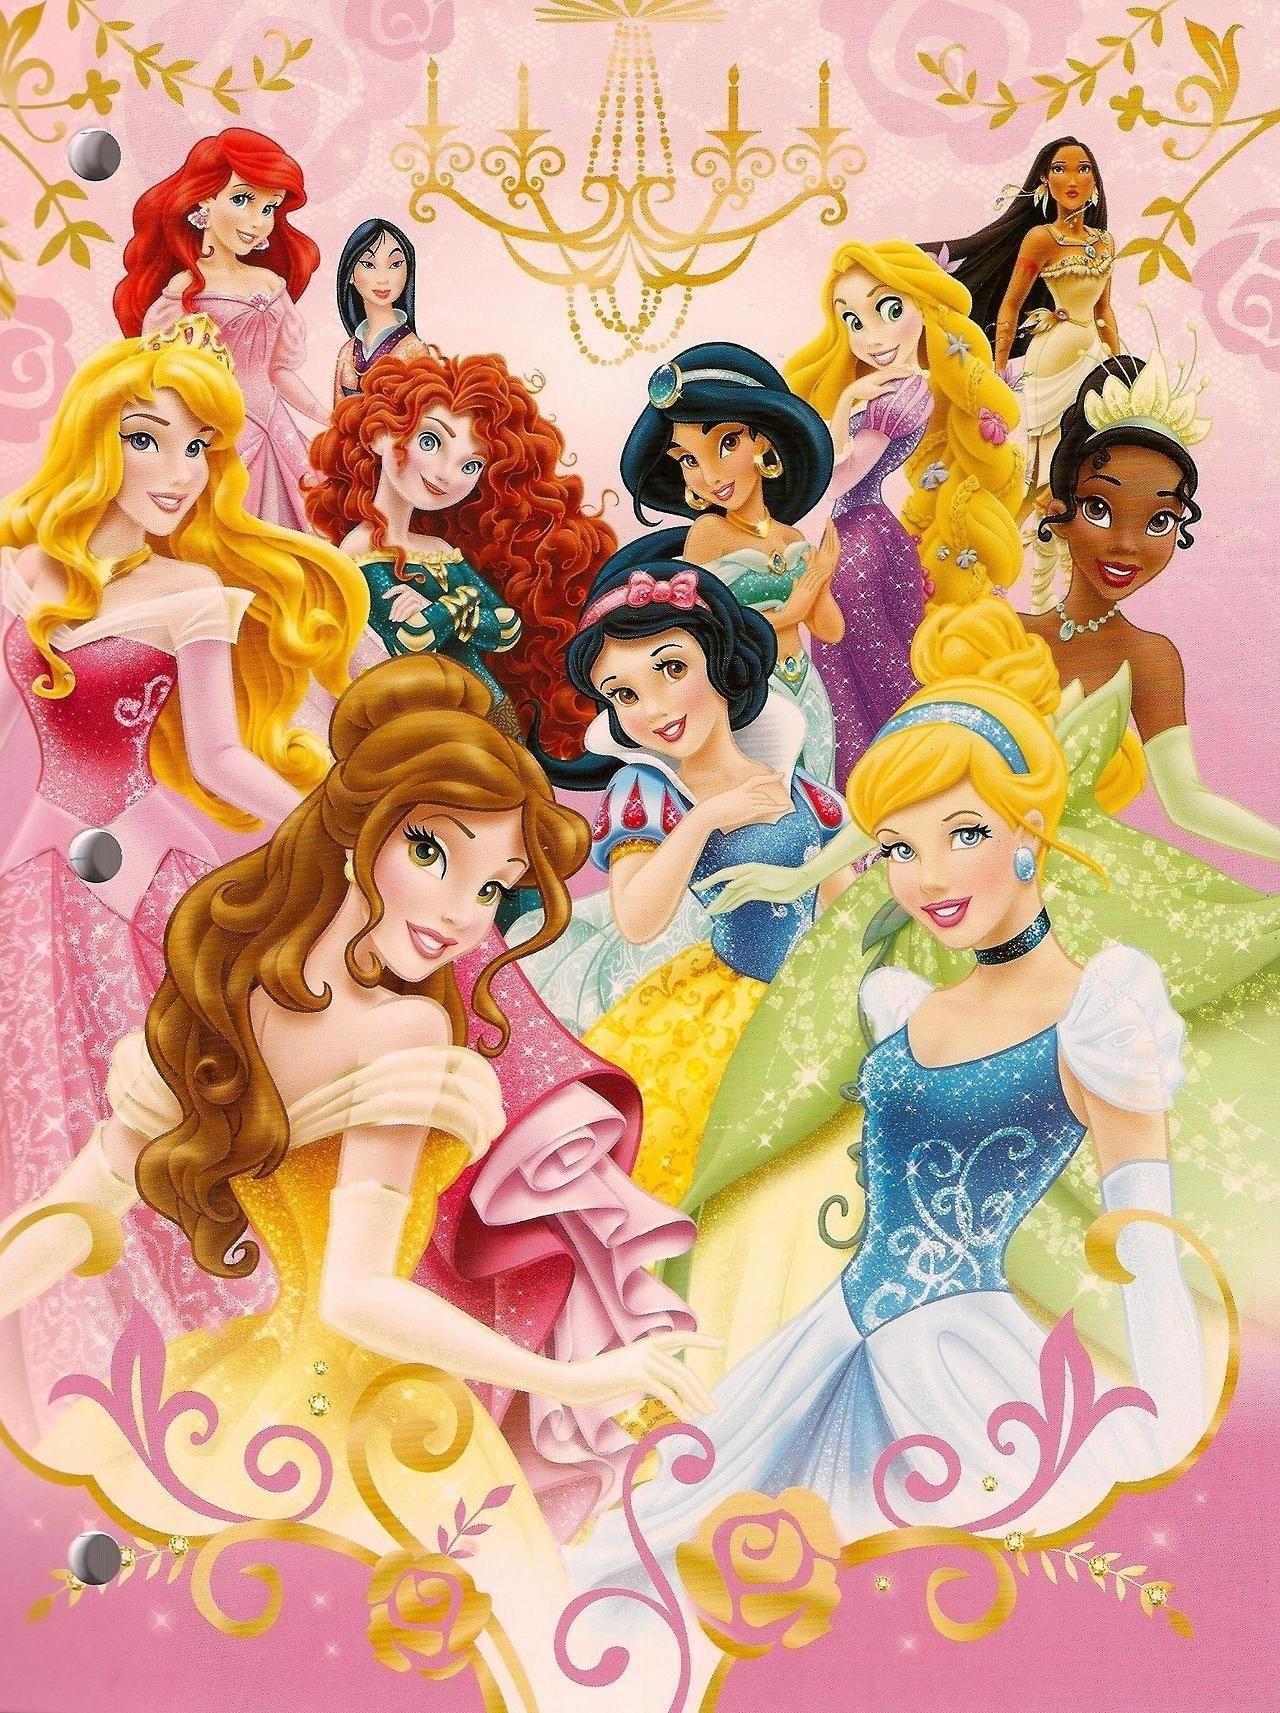 Barbie Princess Wallpapers - Top Free Barbie Princess ...